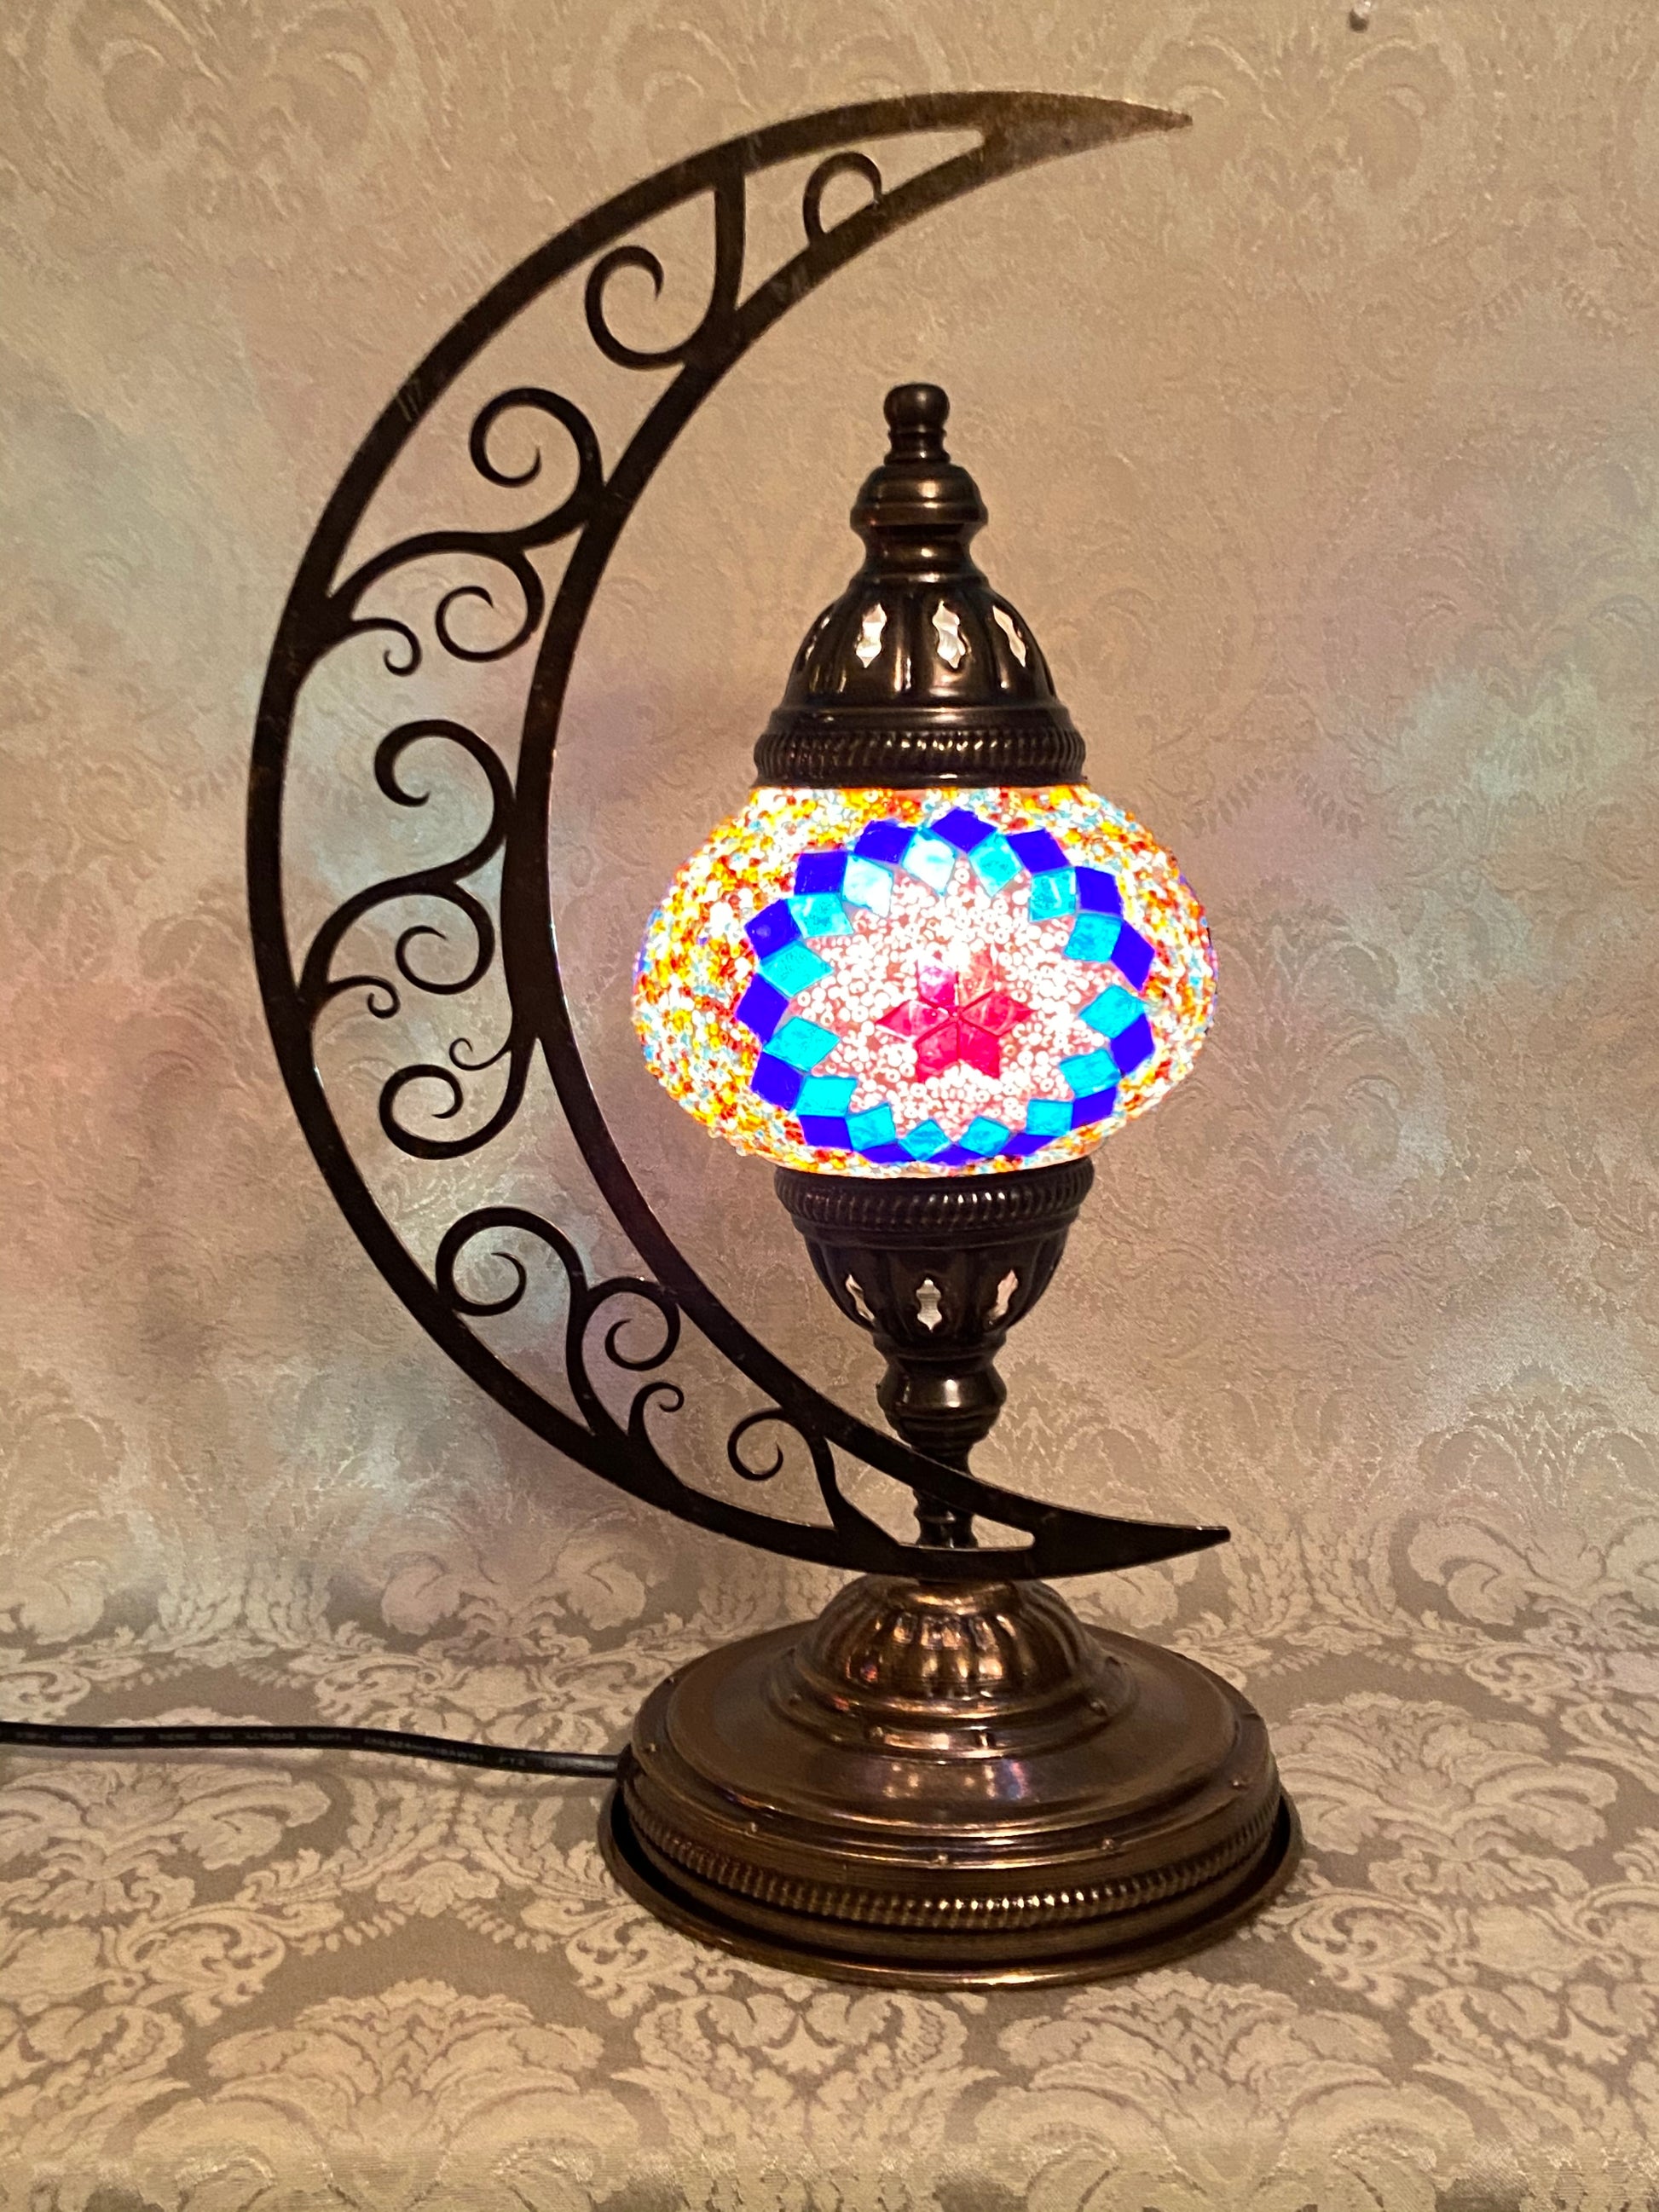 ISTANBUL CRESCENT MOON TABLE LAMP RAINBOW